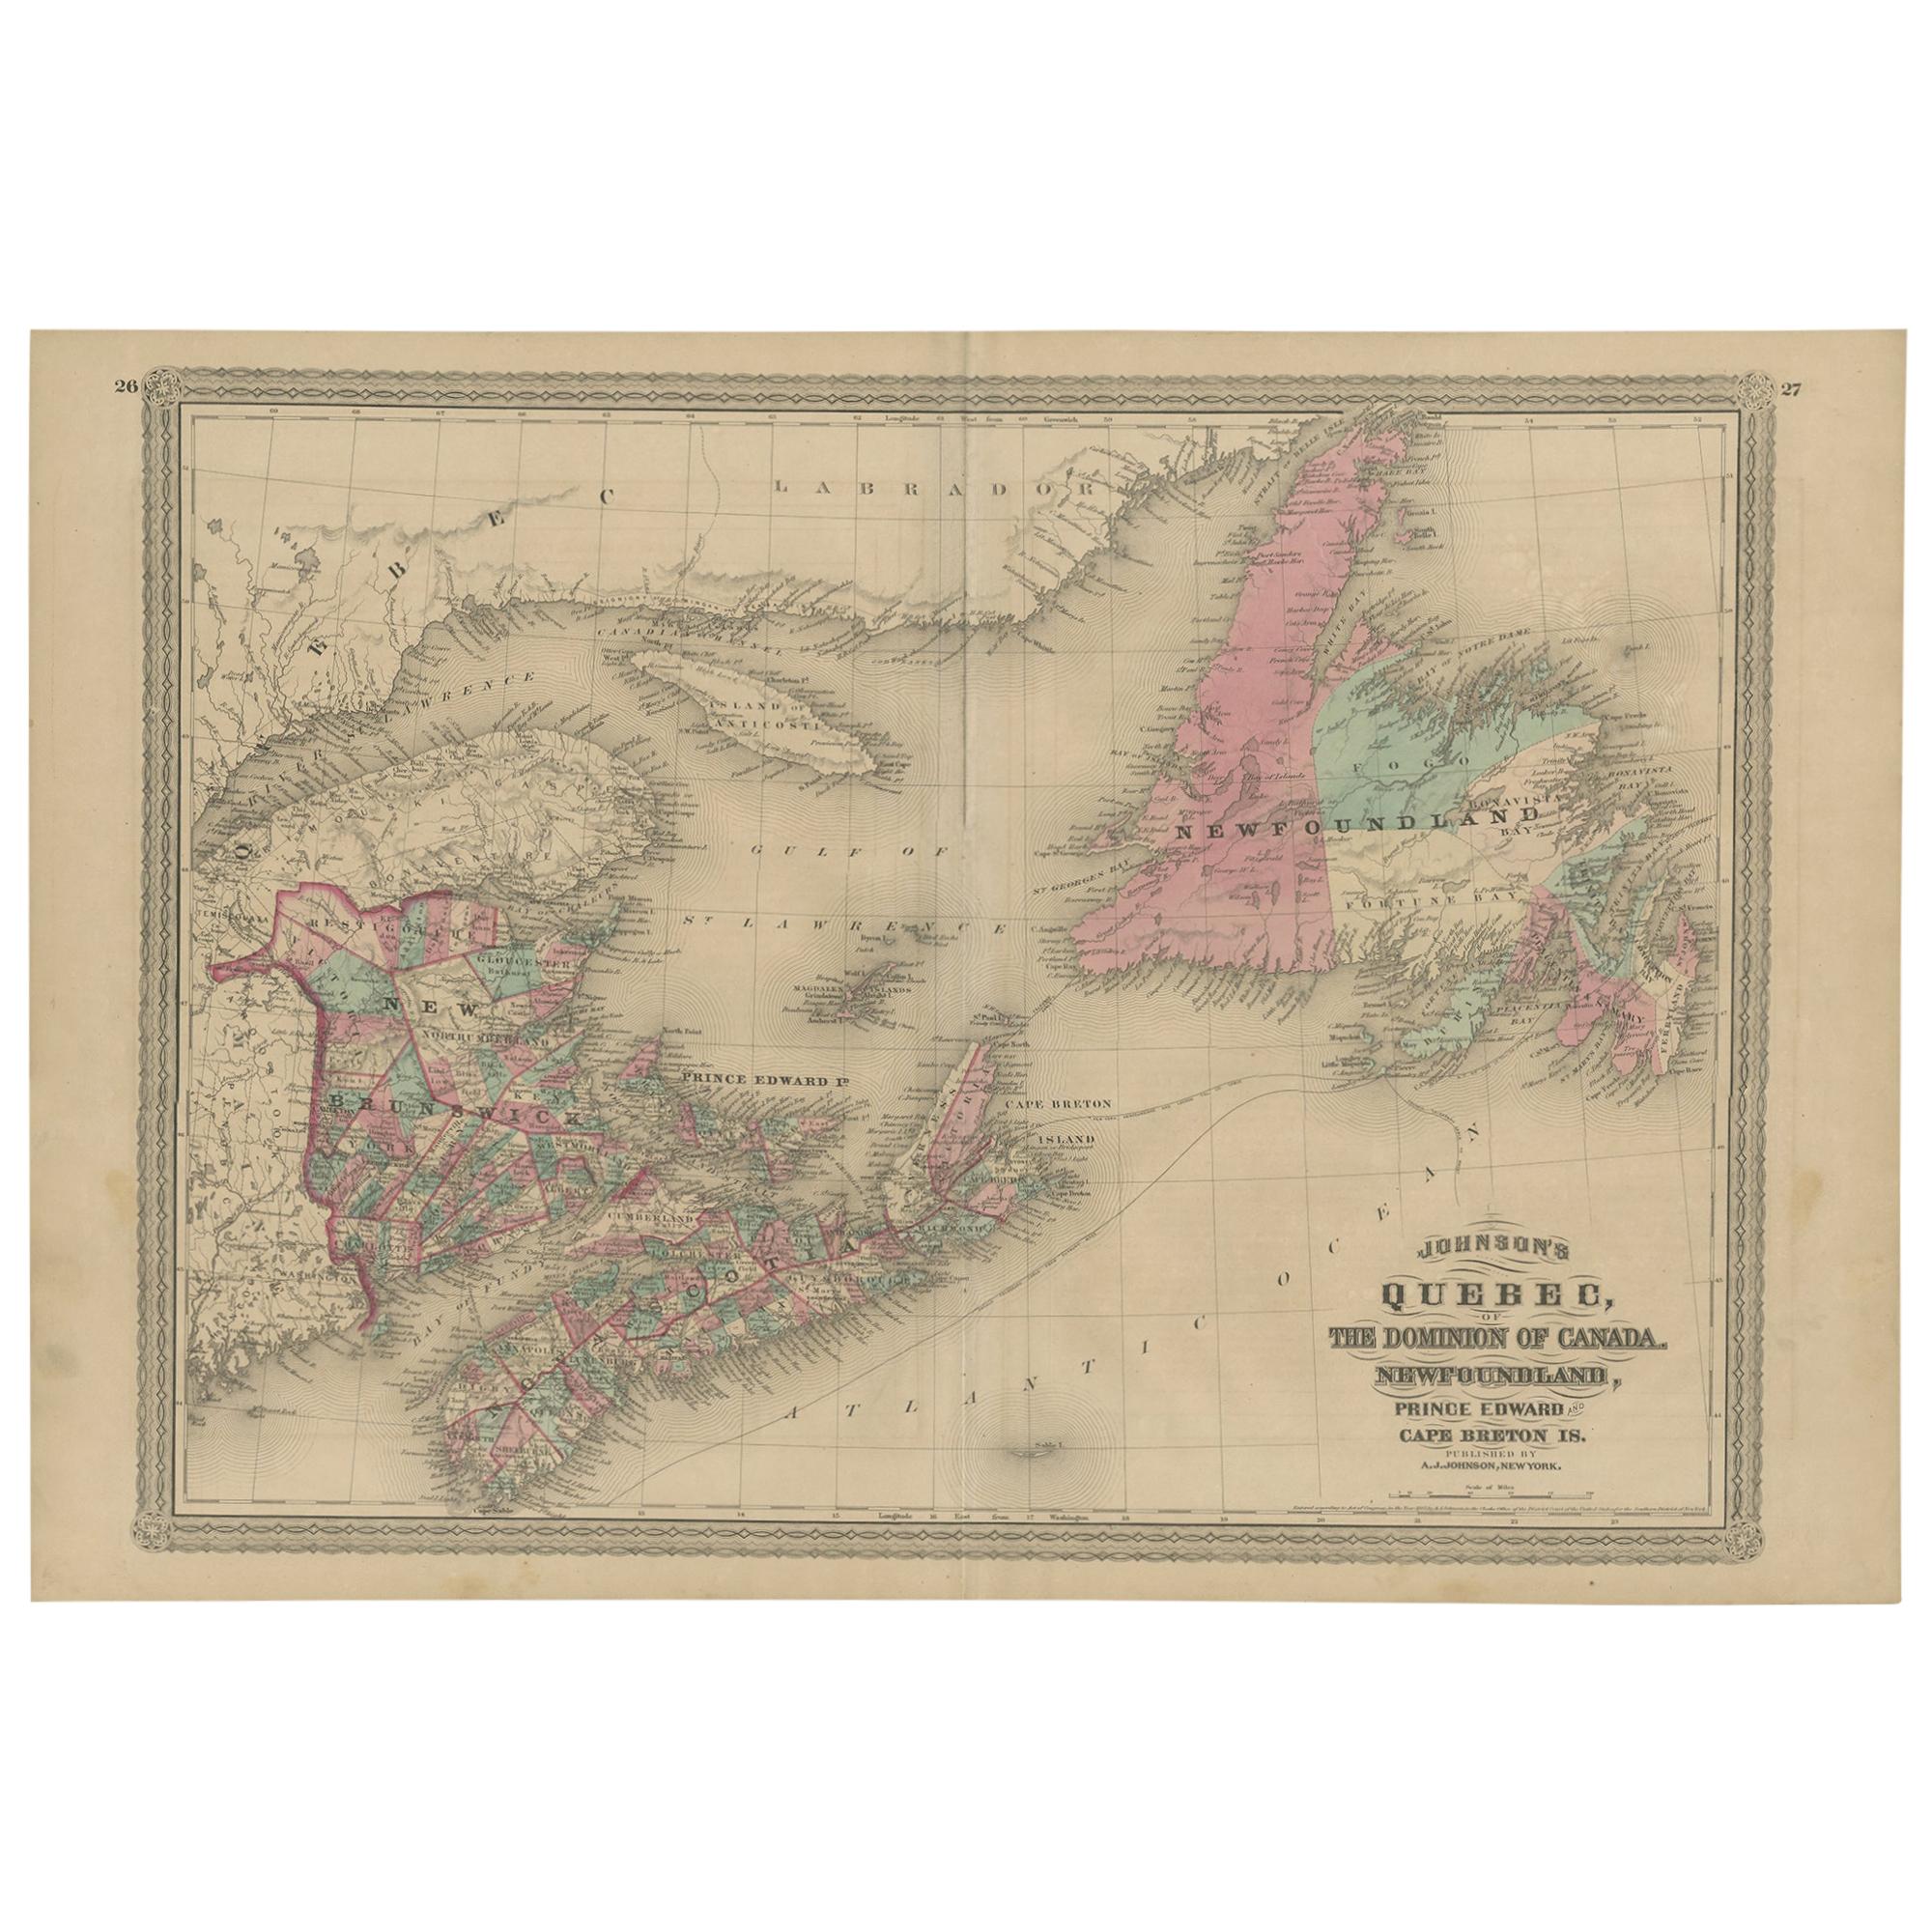 Antique Map of New Brunswick, Nova Scotia and Surroundings by Johnson, 1872